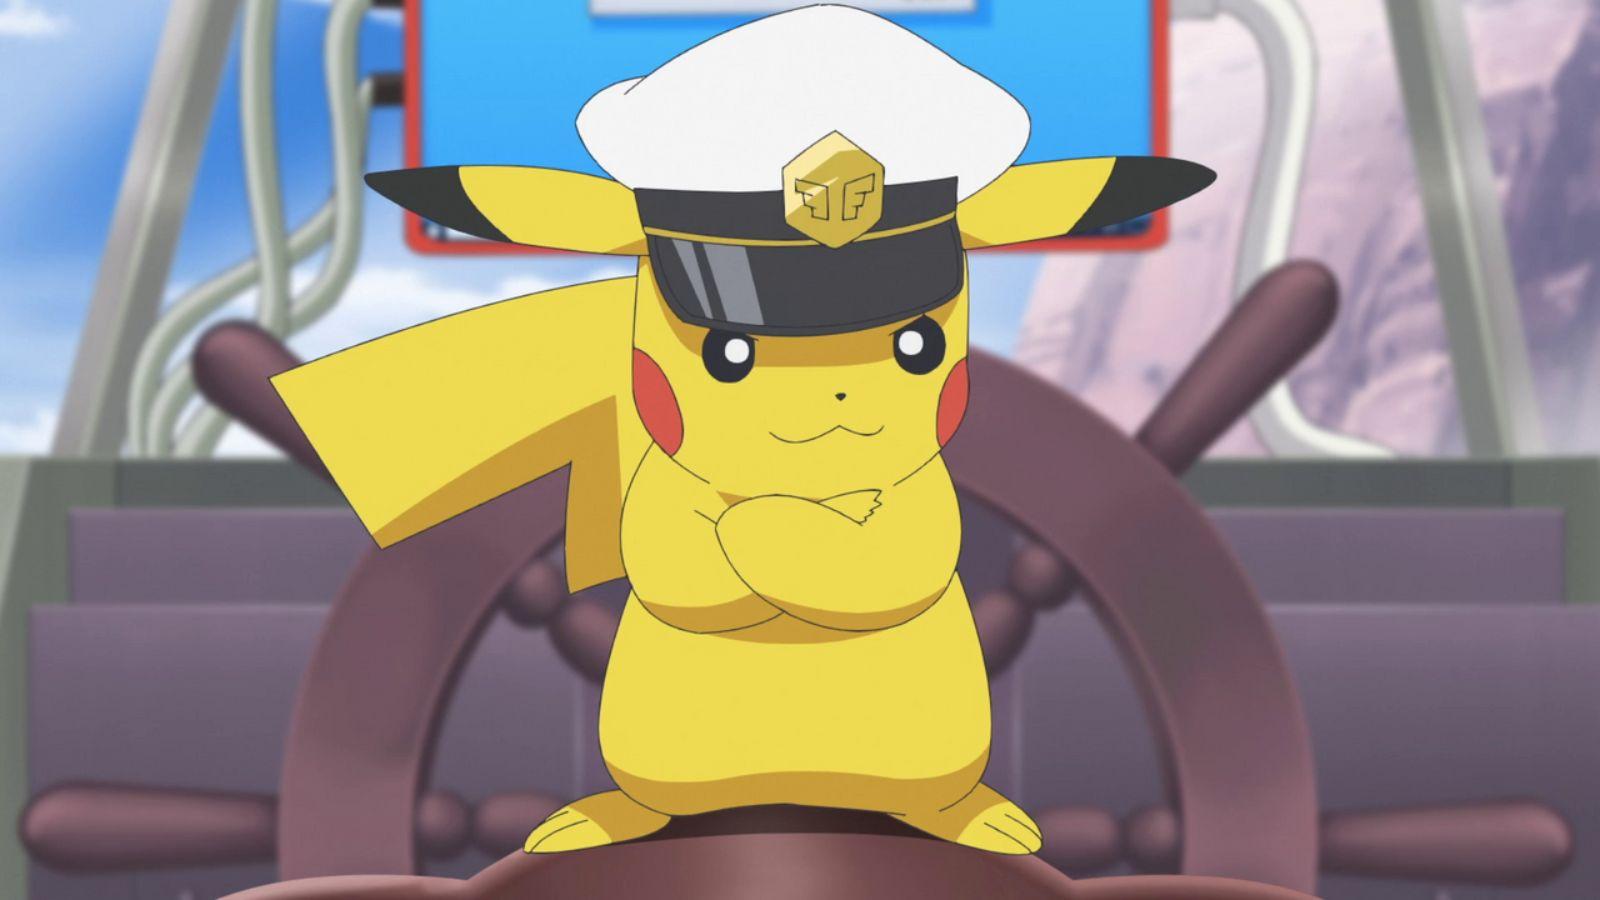 Captain Pikachu from Pokemon anime.